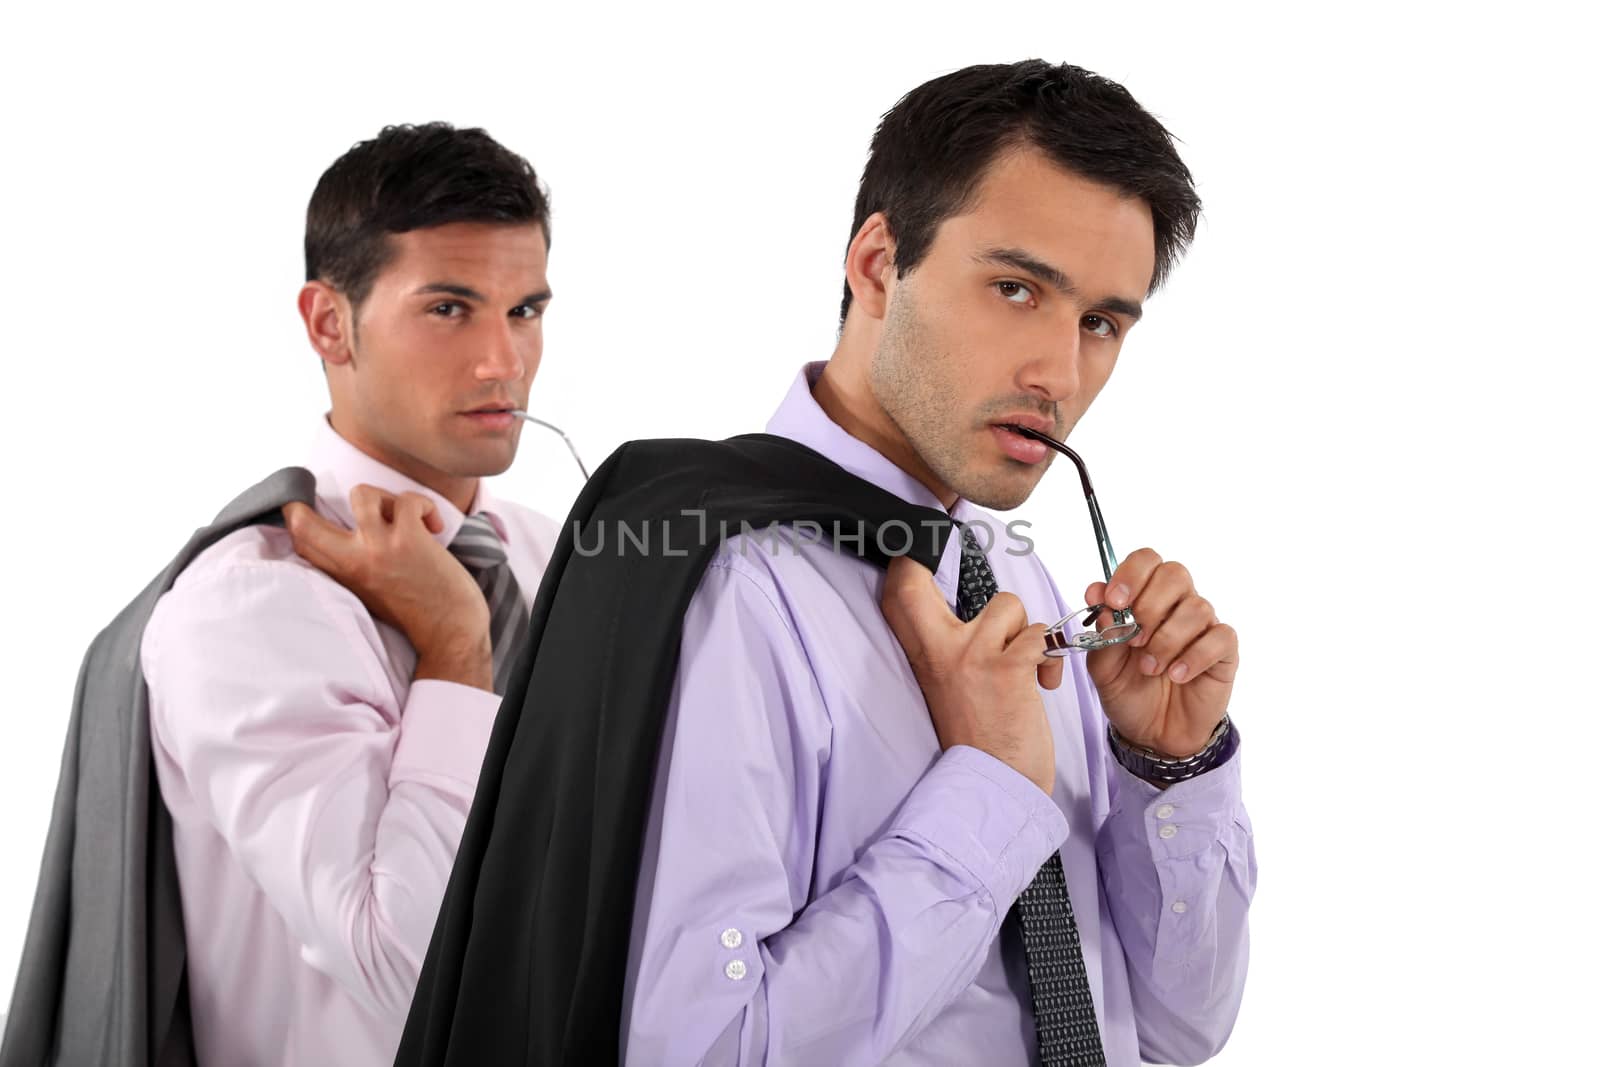 Businessmen holding their jackets